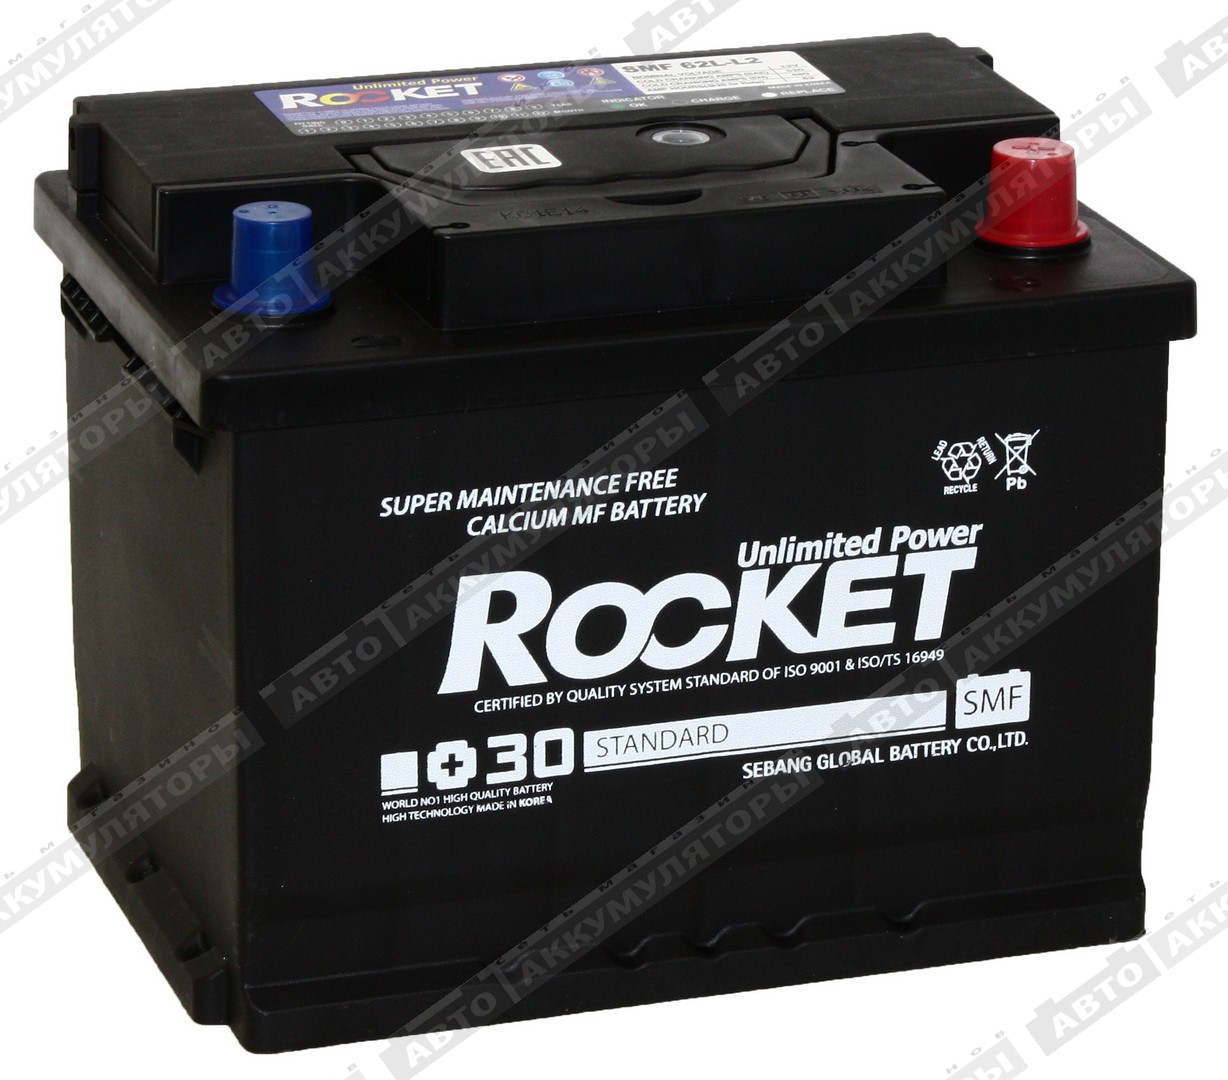 Rocket SMF 62.0 L